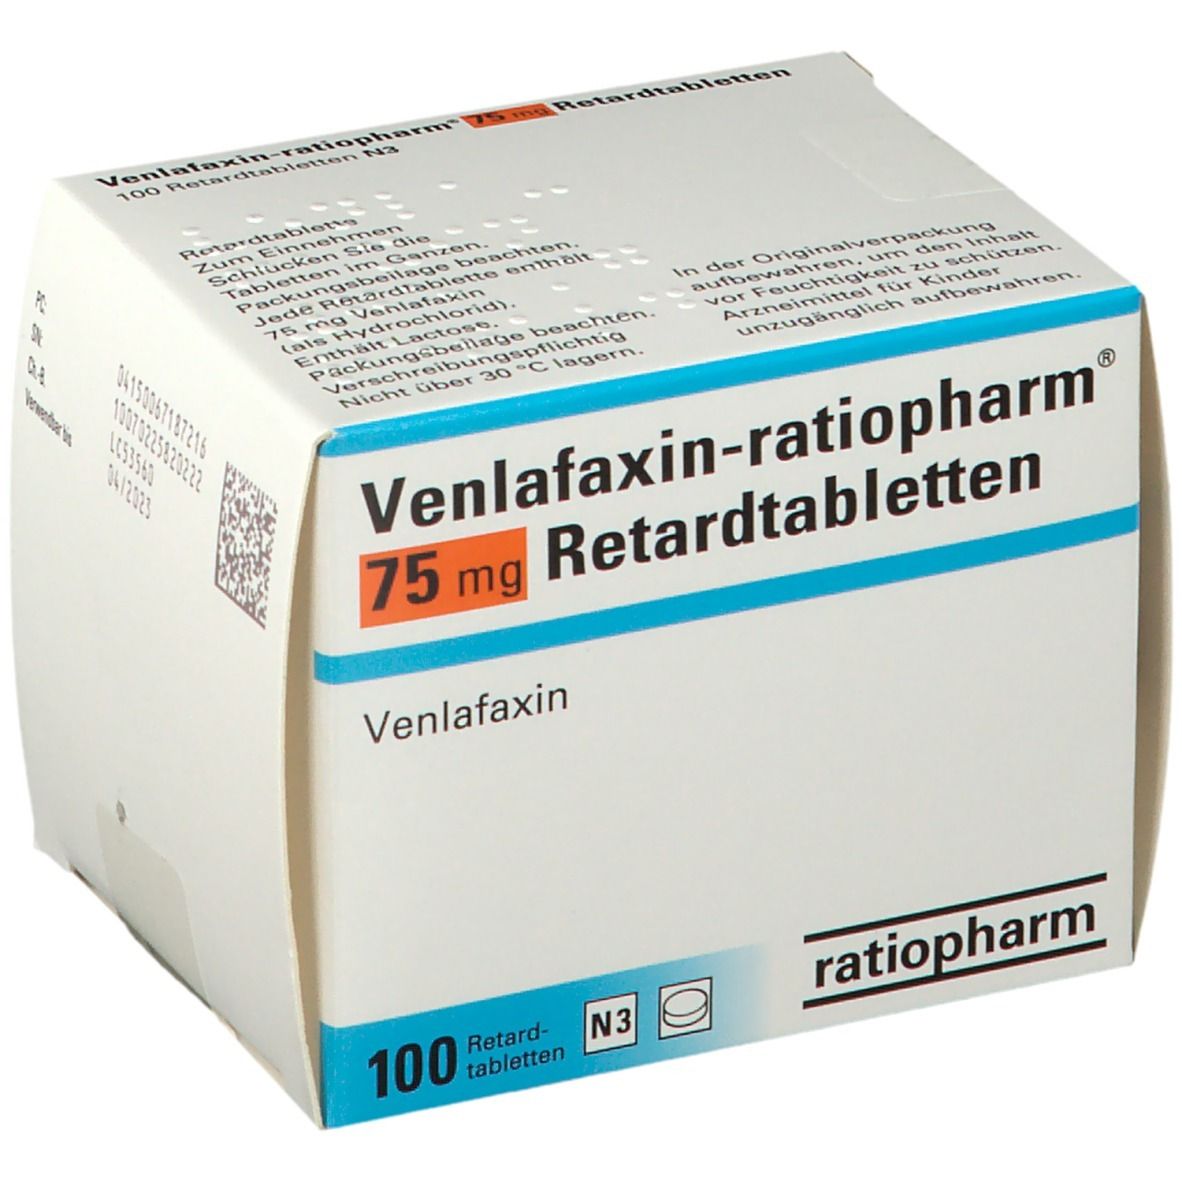 Venlafaxin-ratiopharm® 75 mg